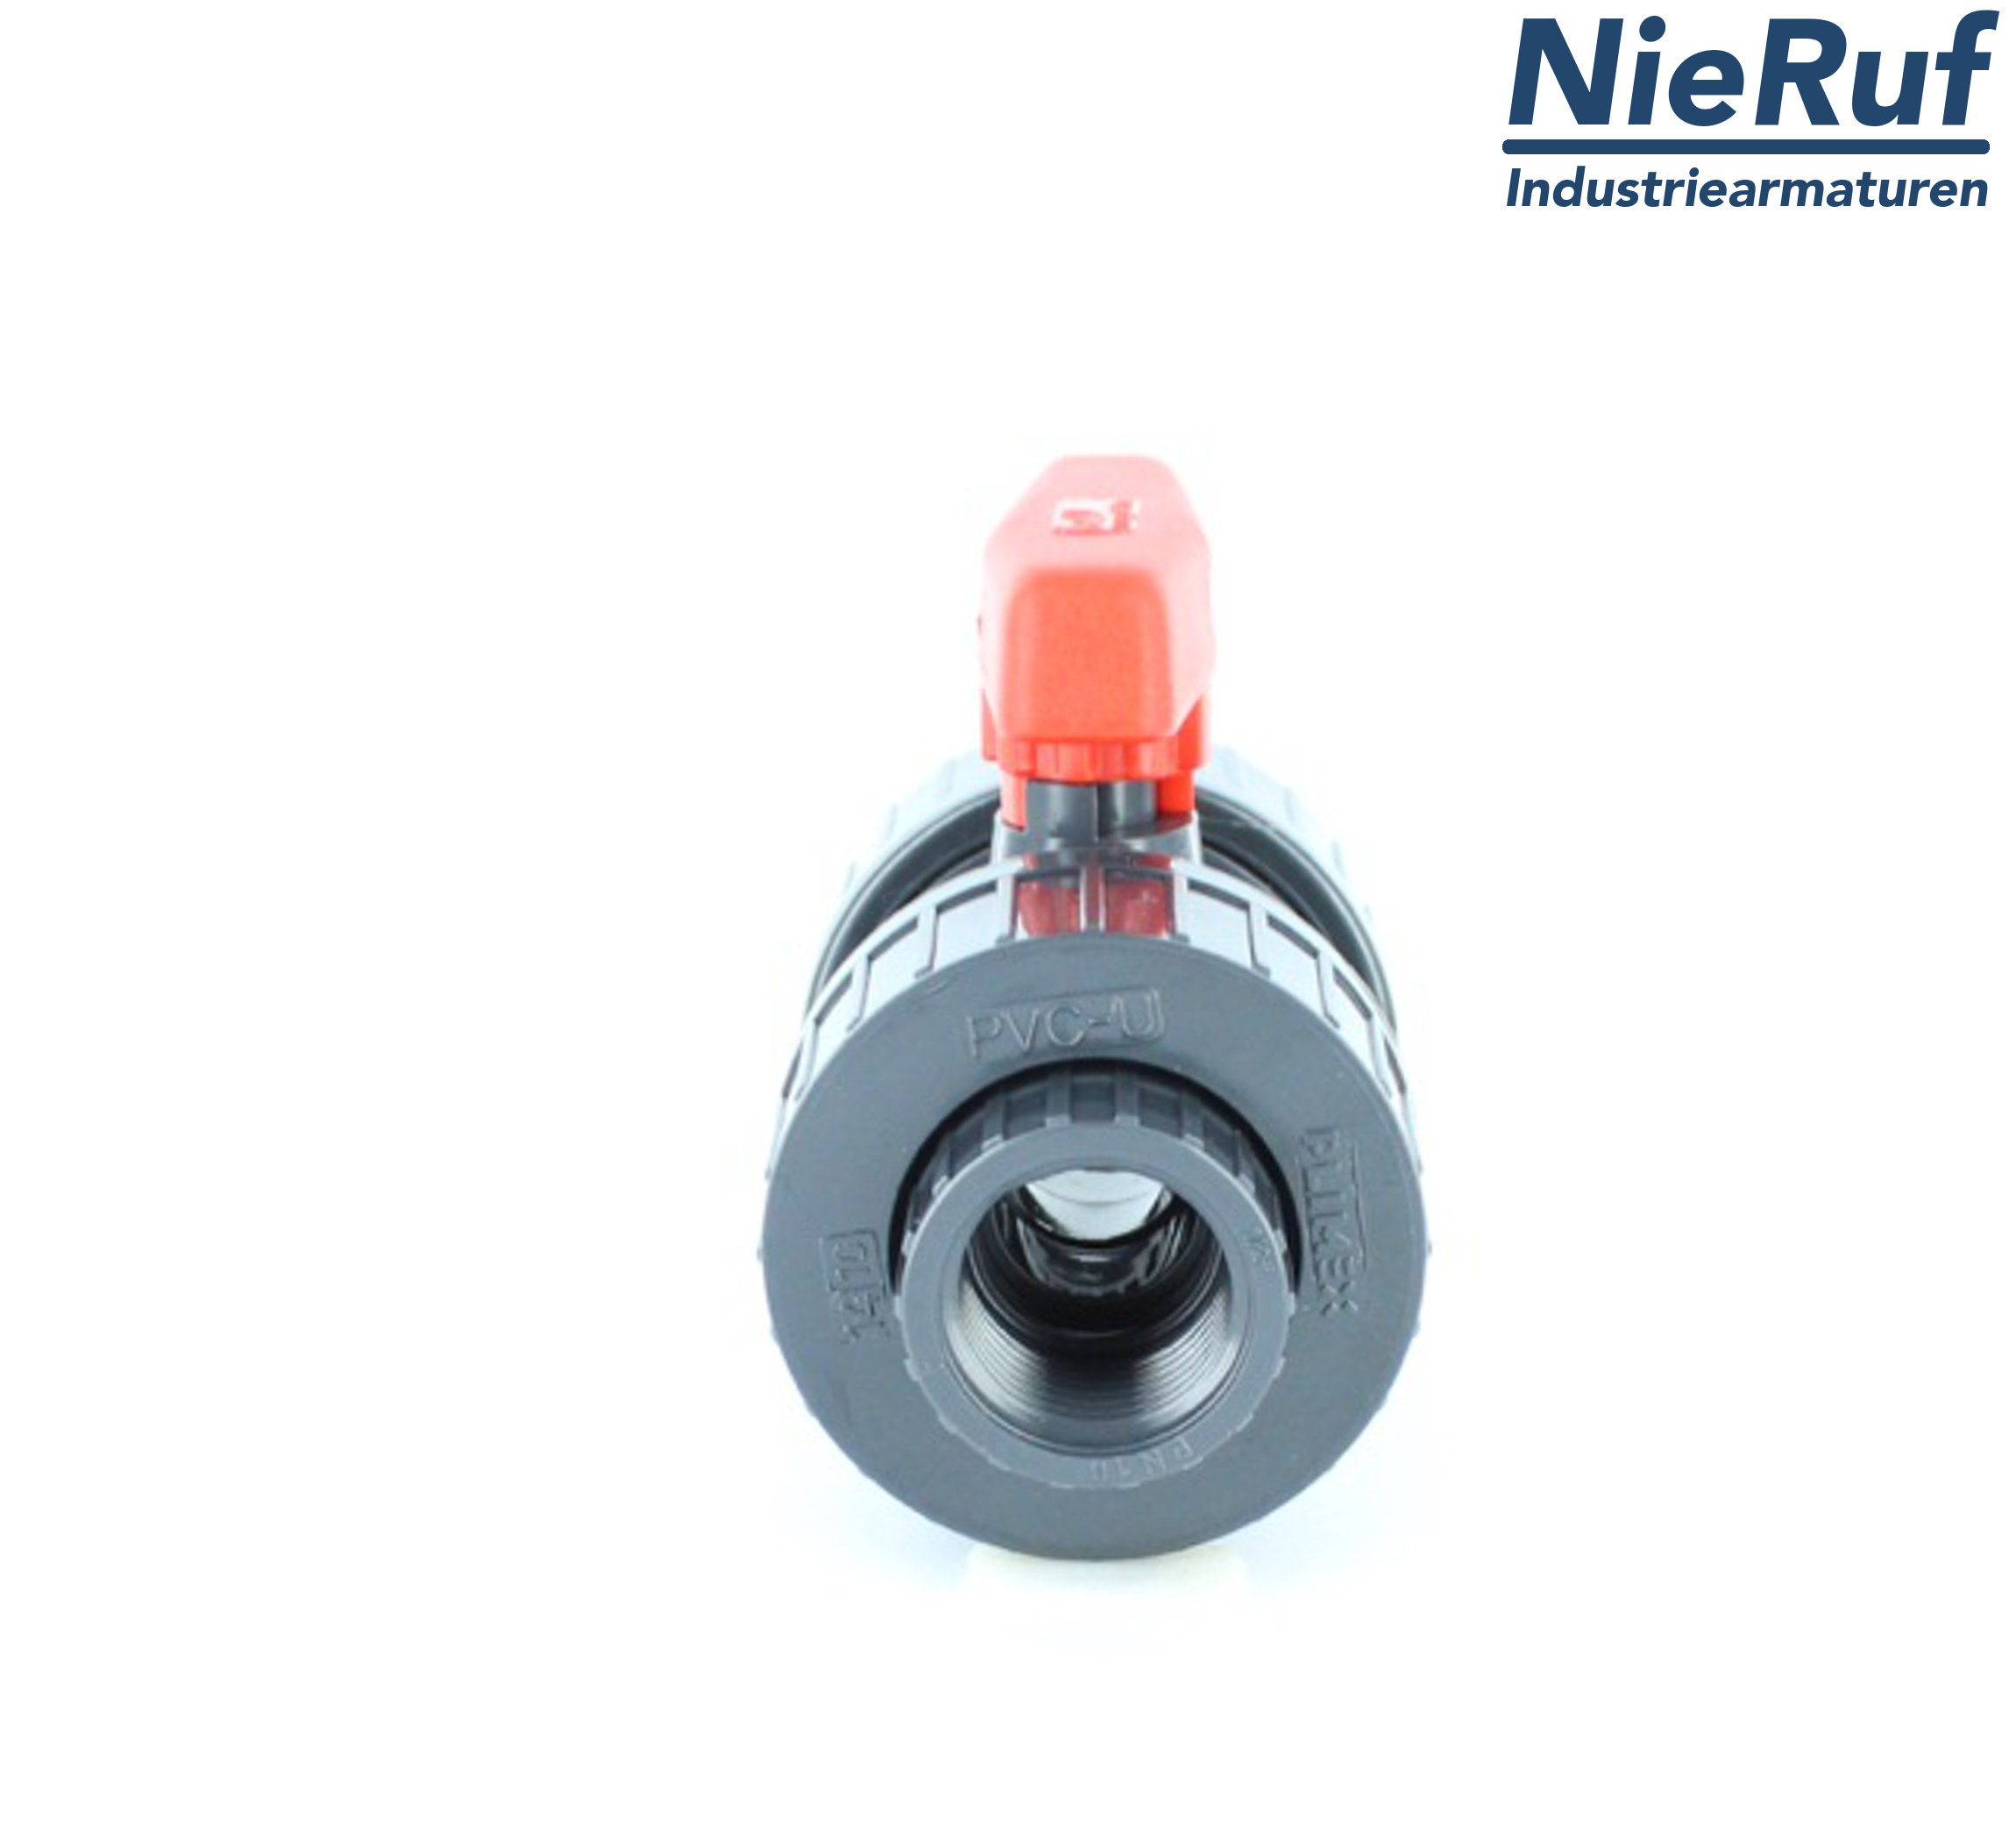 PVC-ball valve DN20 - 3/4" inch KK02 Hytrel/EPDM